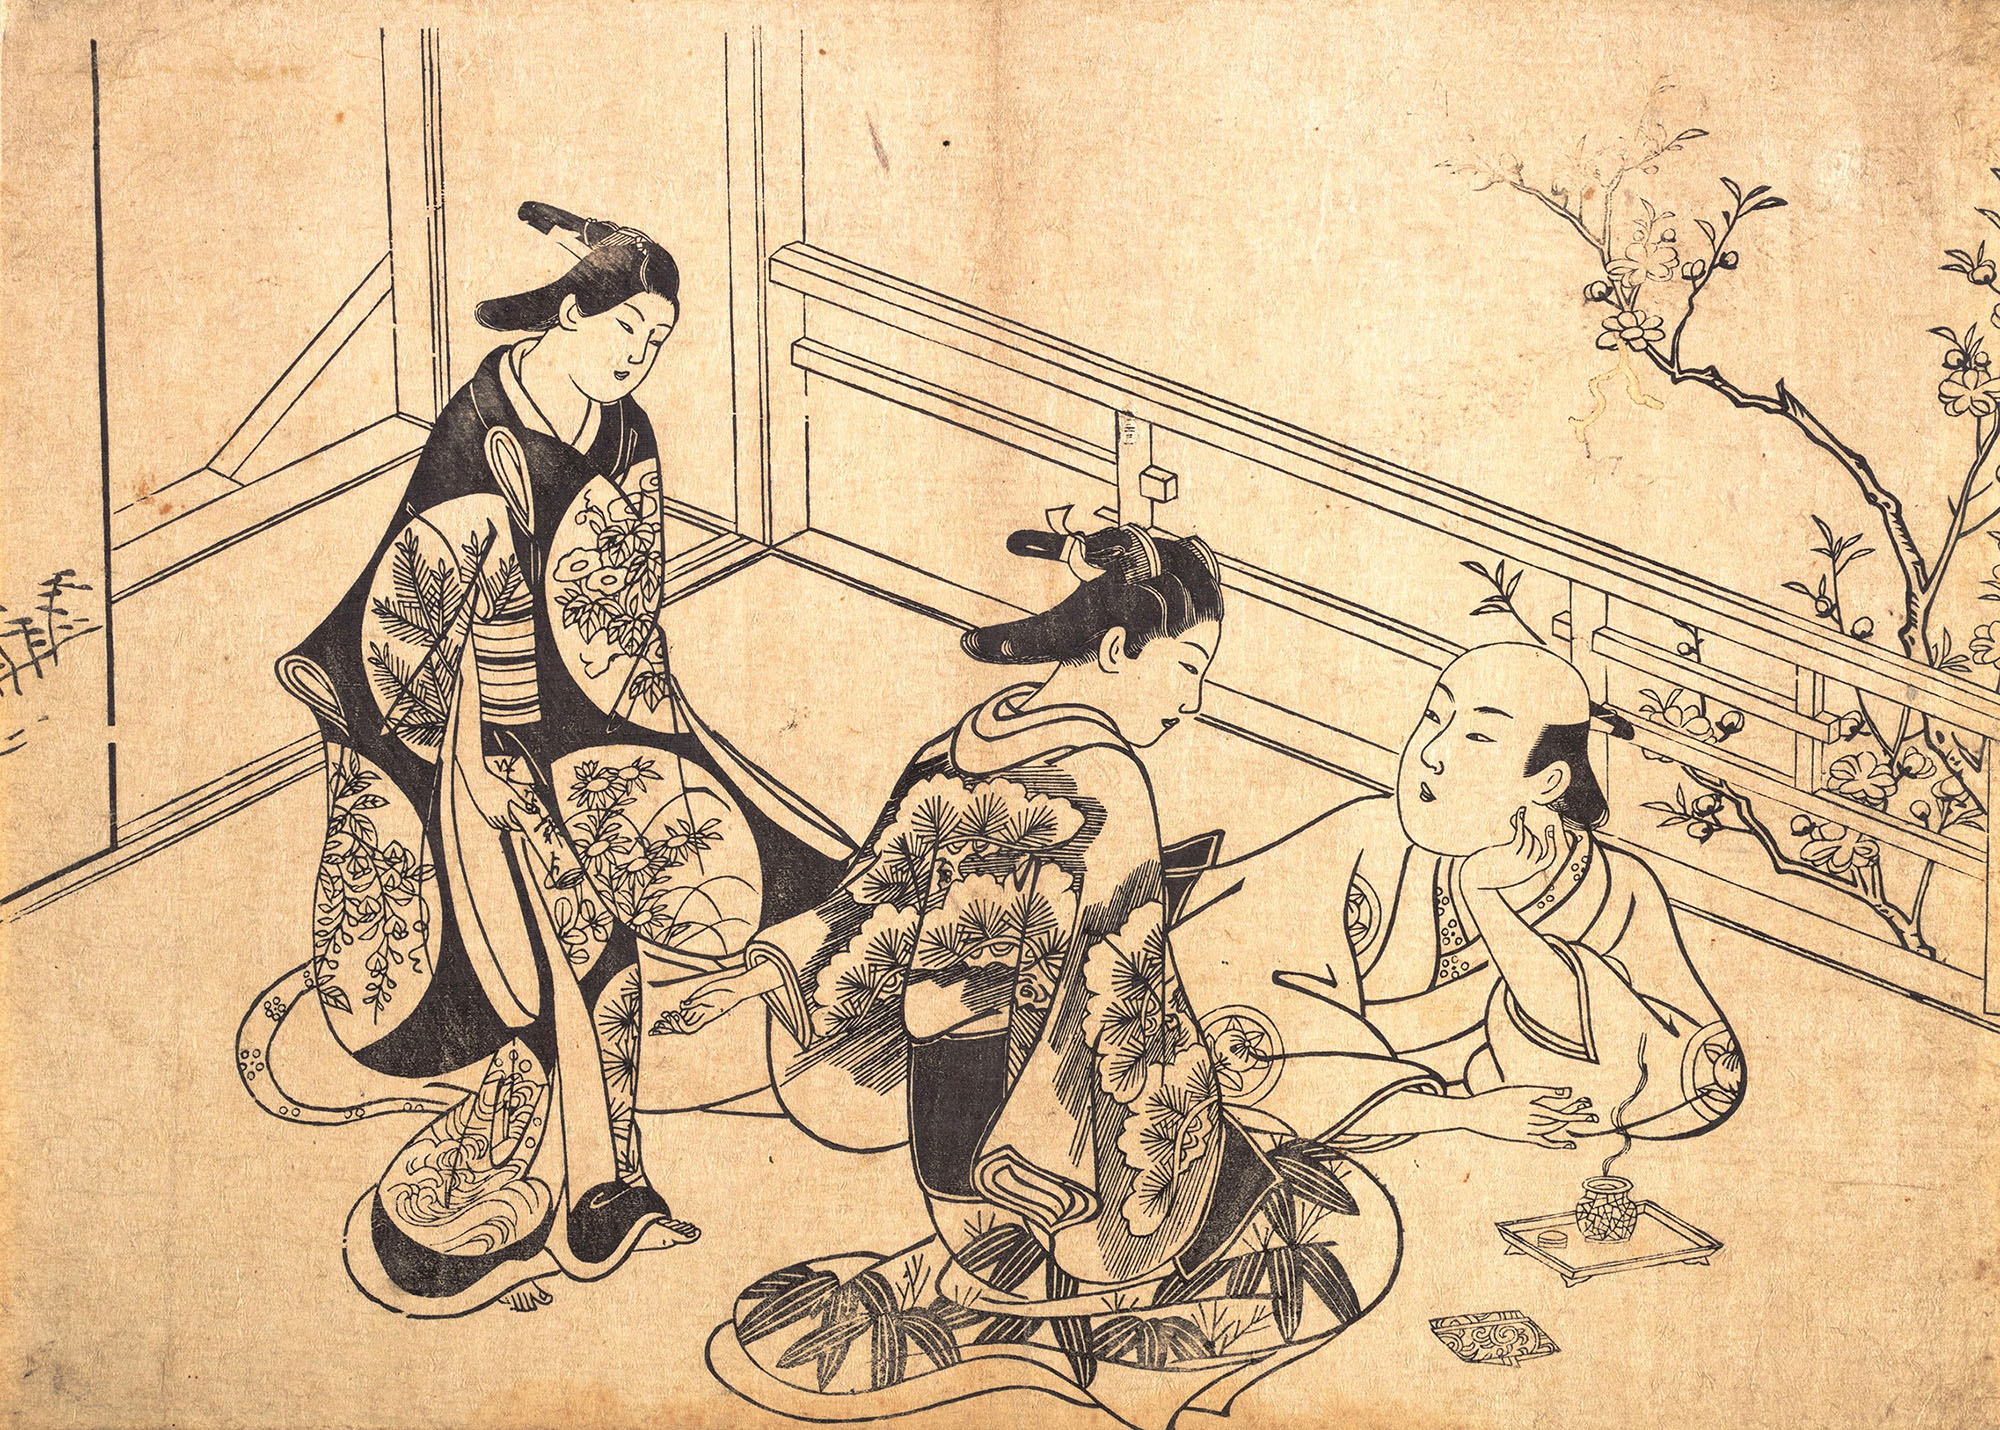 Окумура Масанобу. "Актёр Ичимура Такенодзо отдыхает на балконе". Около 1715.